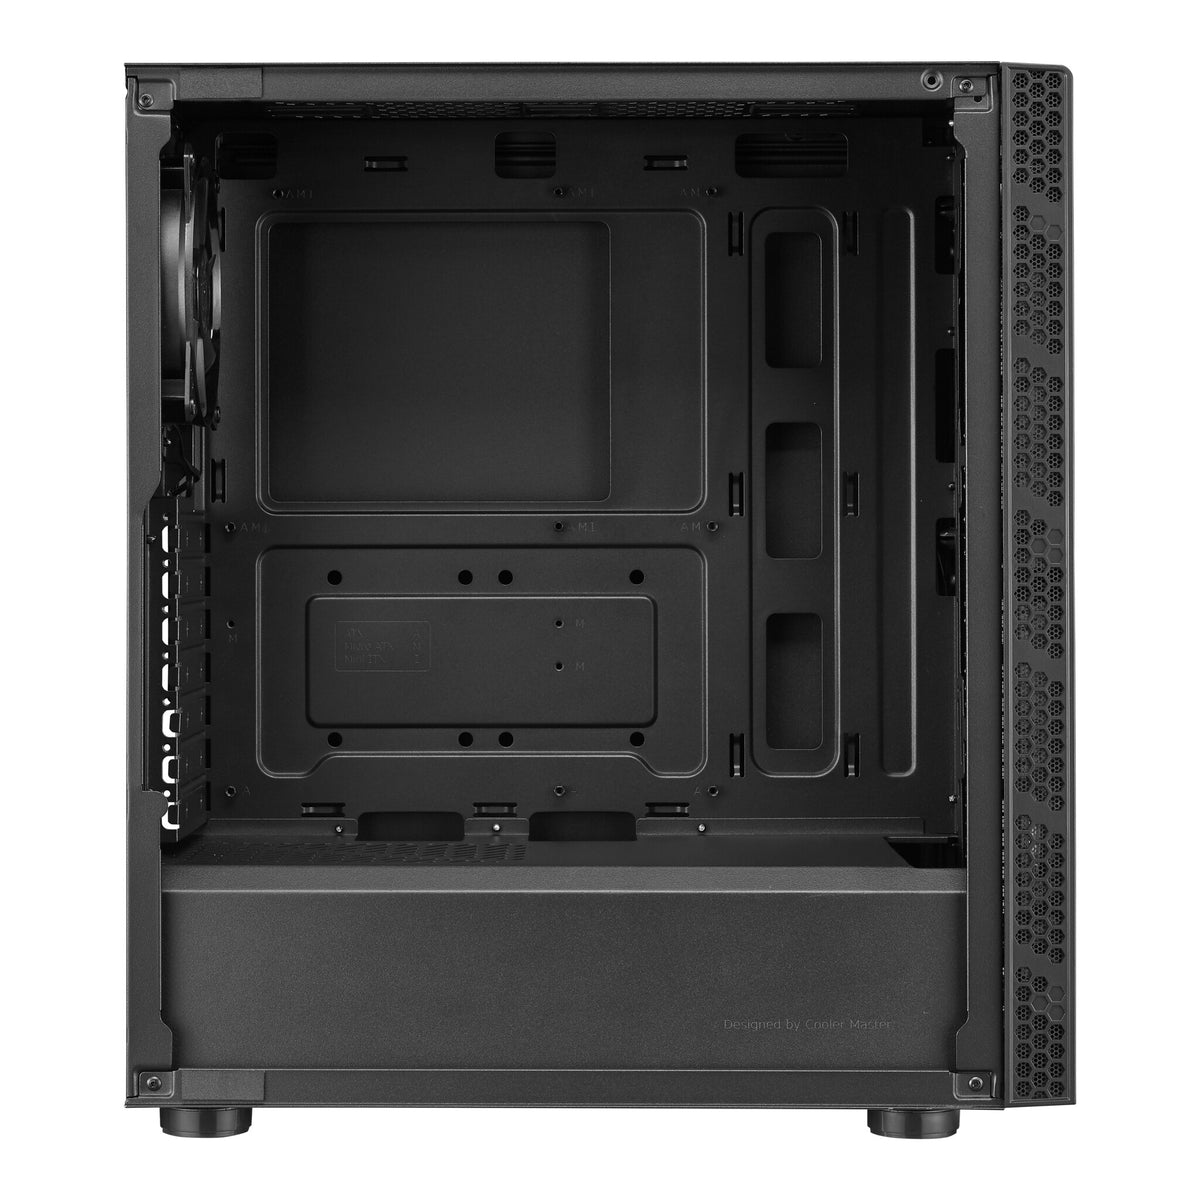 Cooler Master MasterBox MB600L V2 - ATX Mid Tower Case in Black